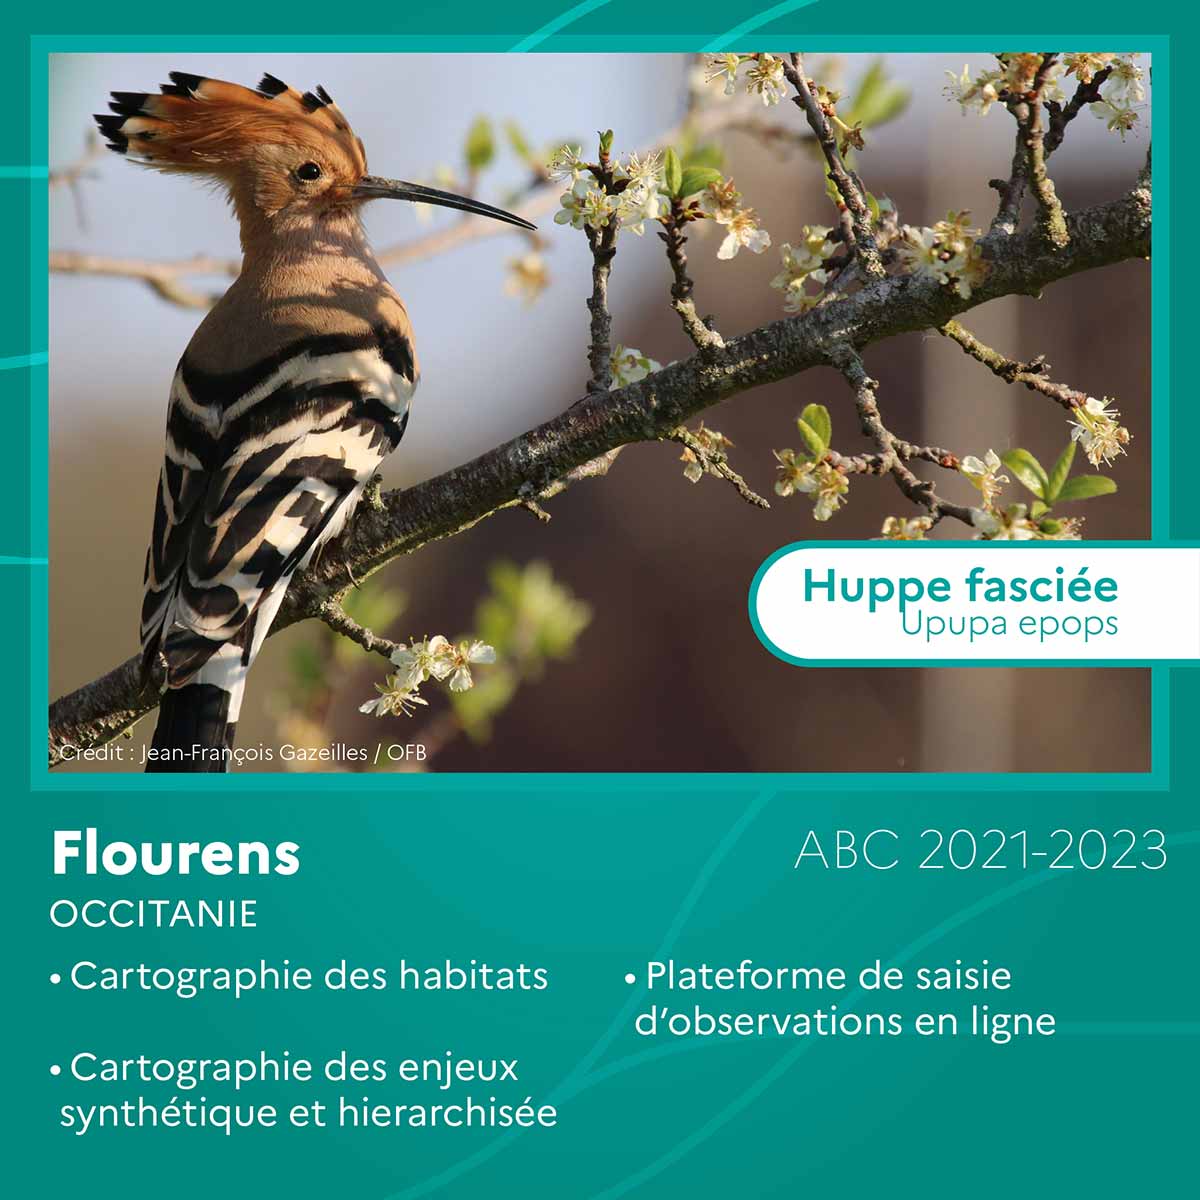 Flourens (Occitanie)